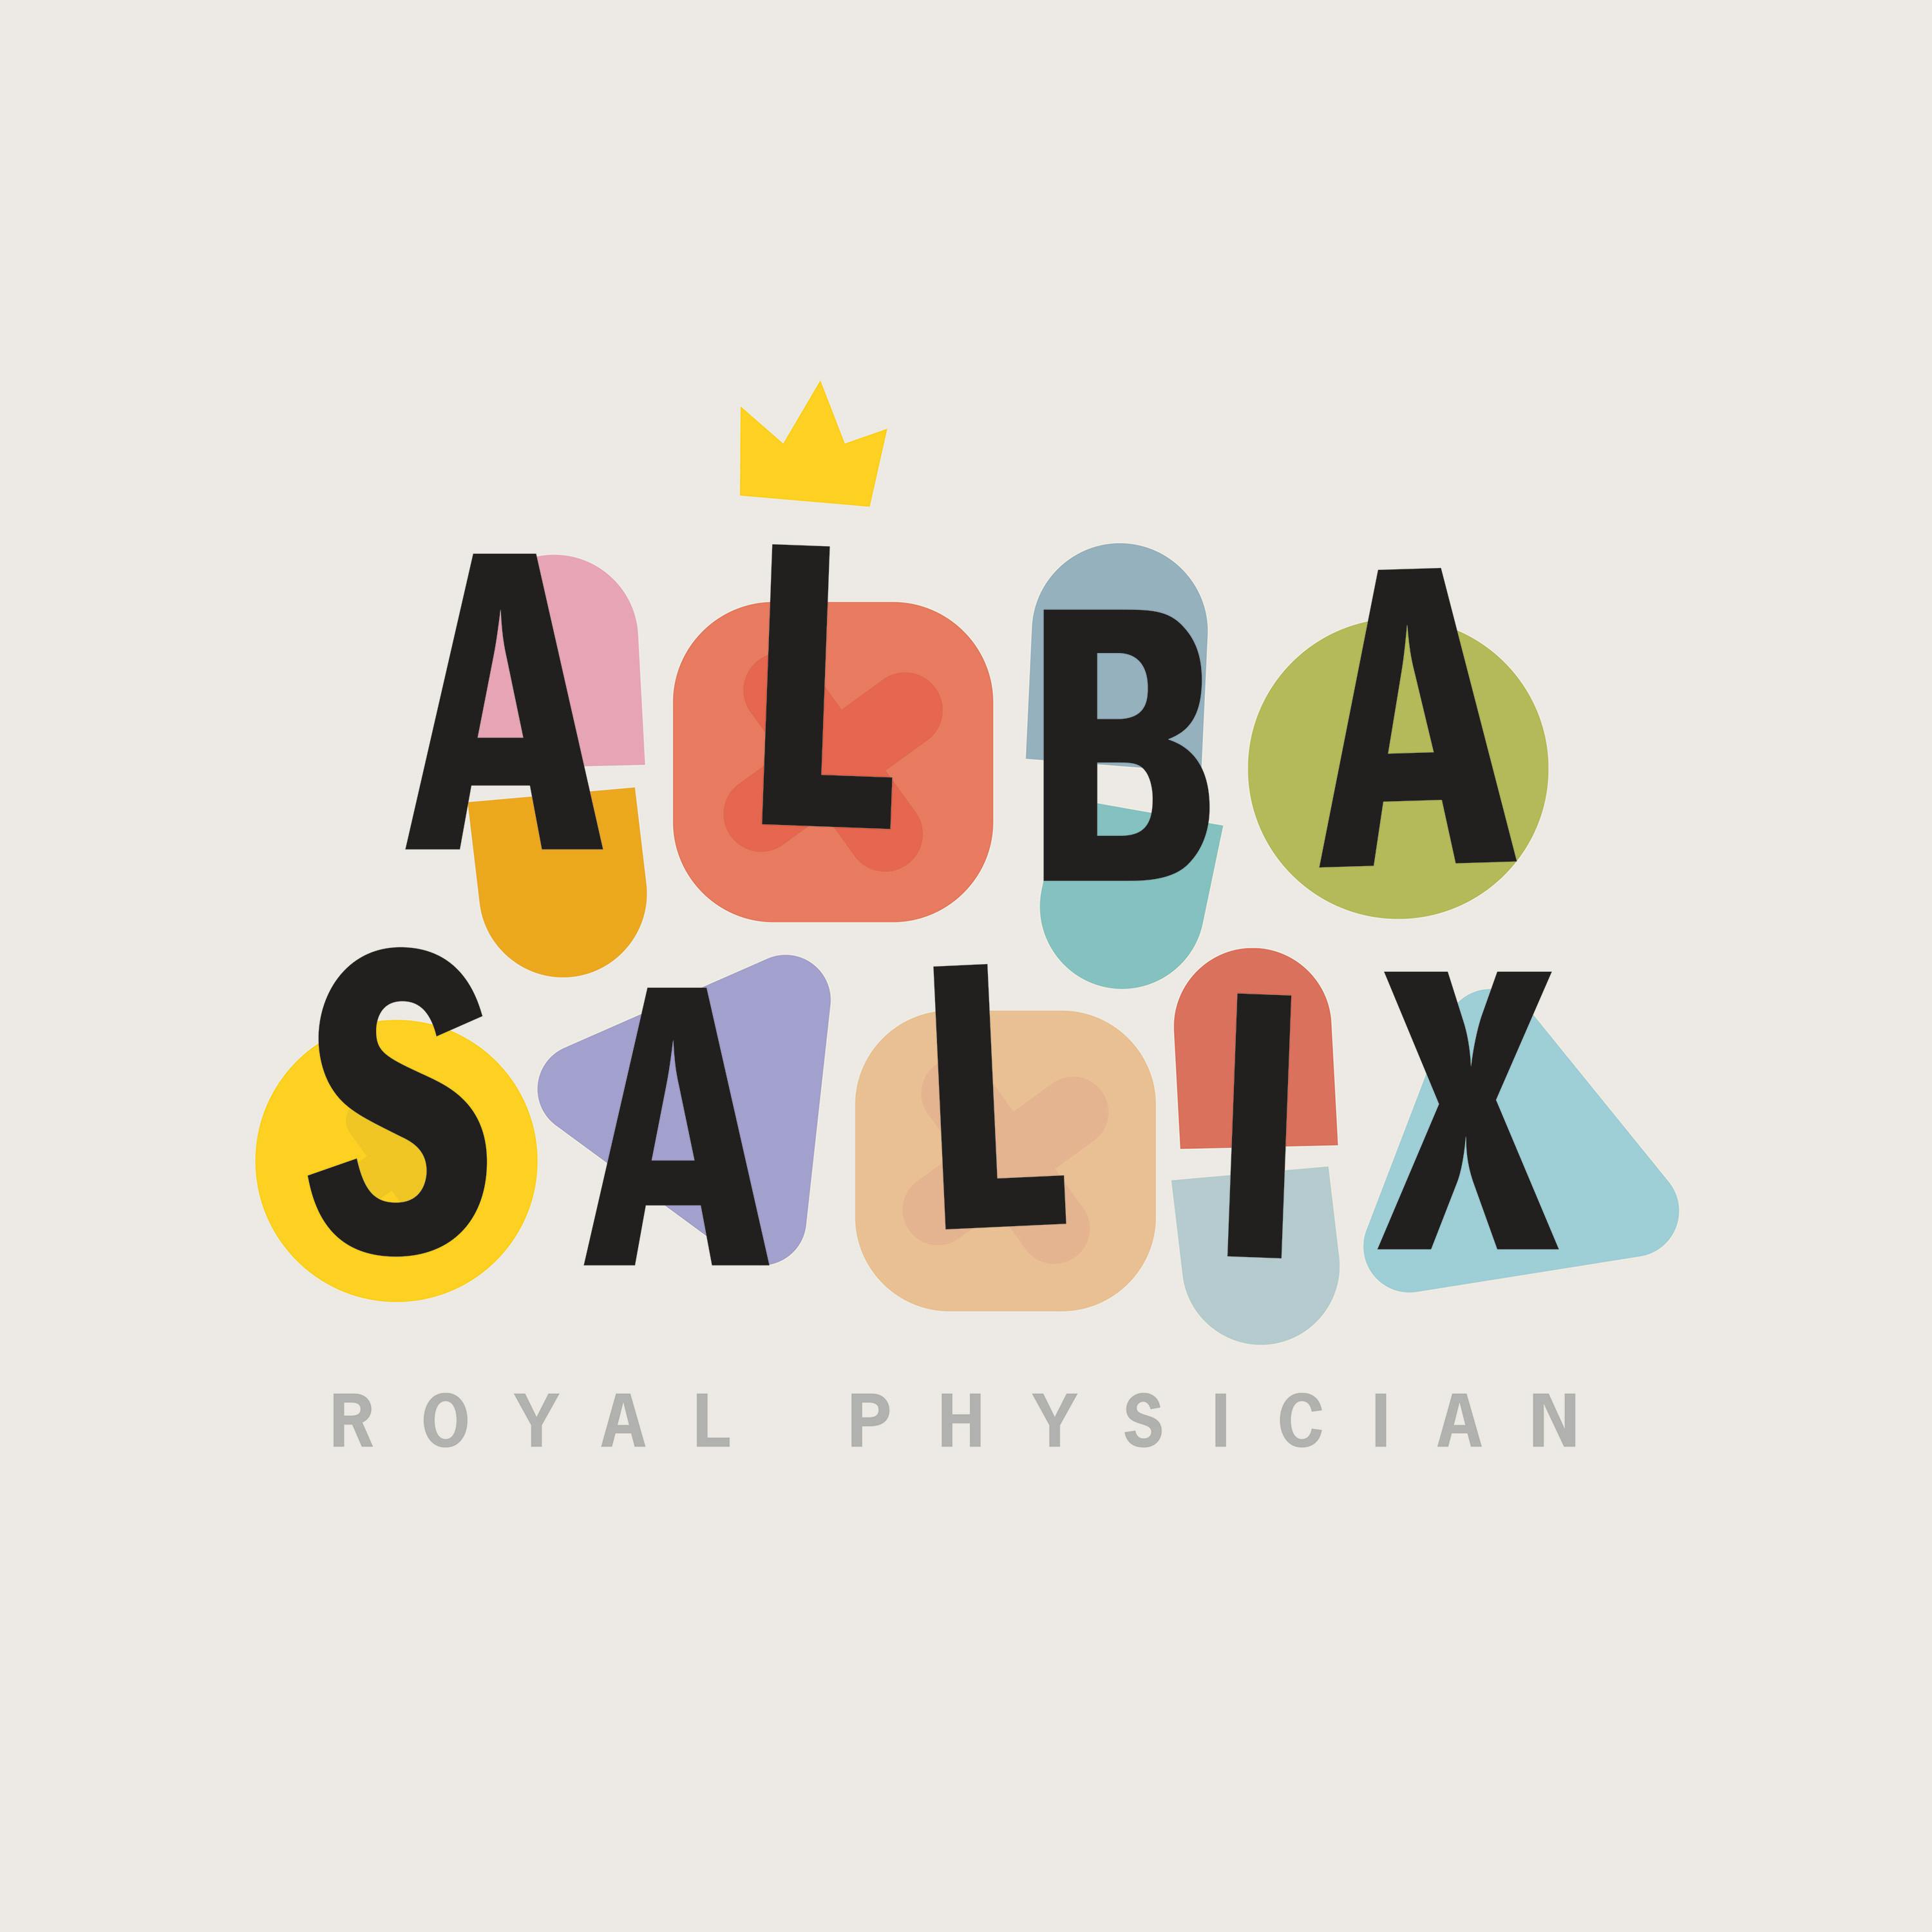 "Alba Salix, Royal Physician" Podcast